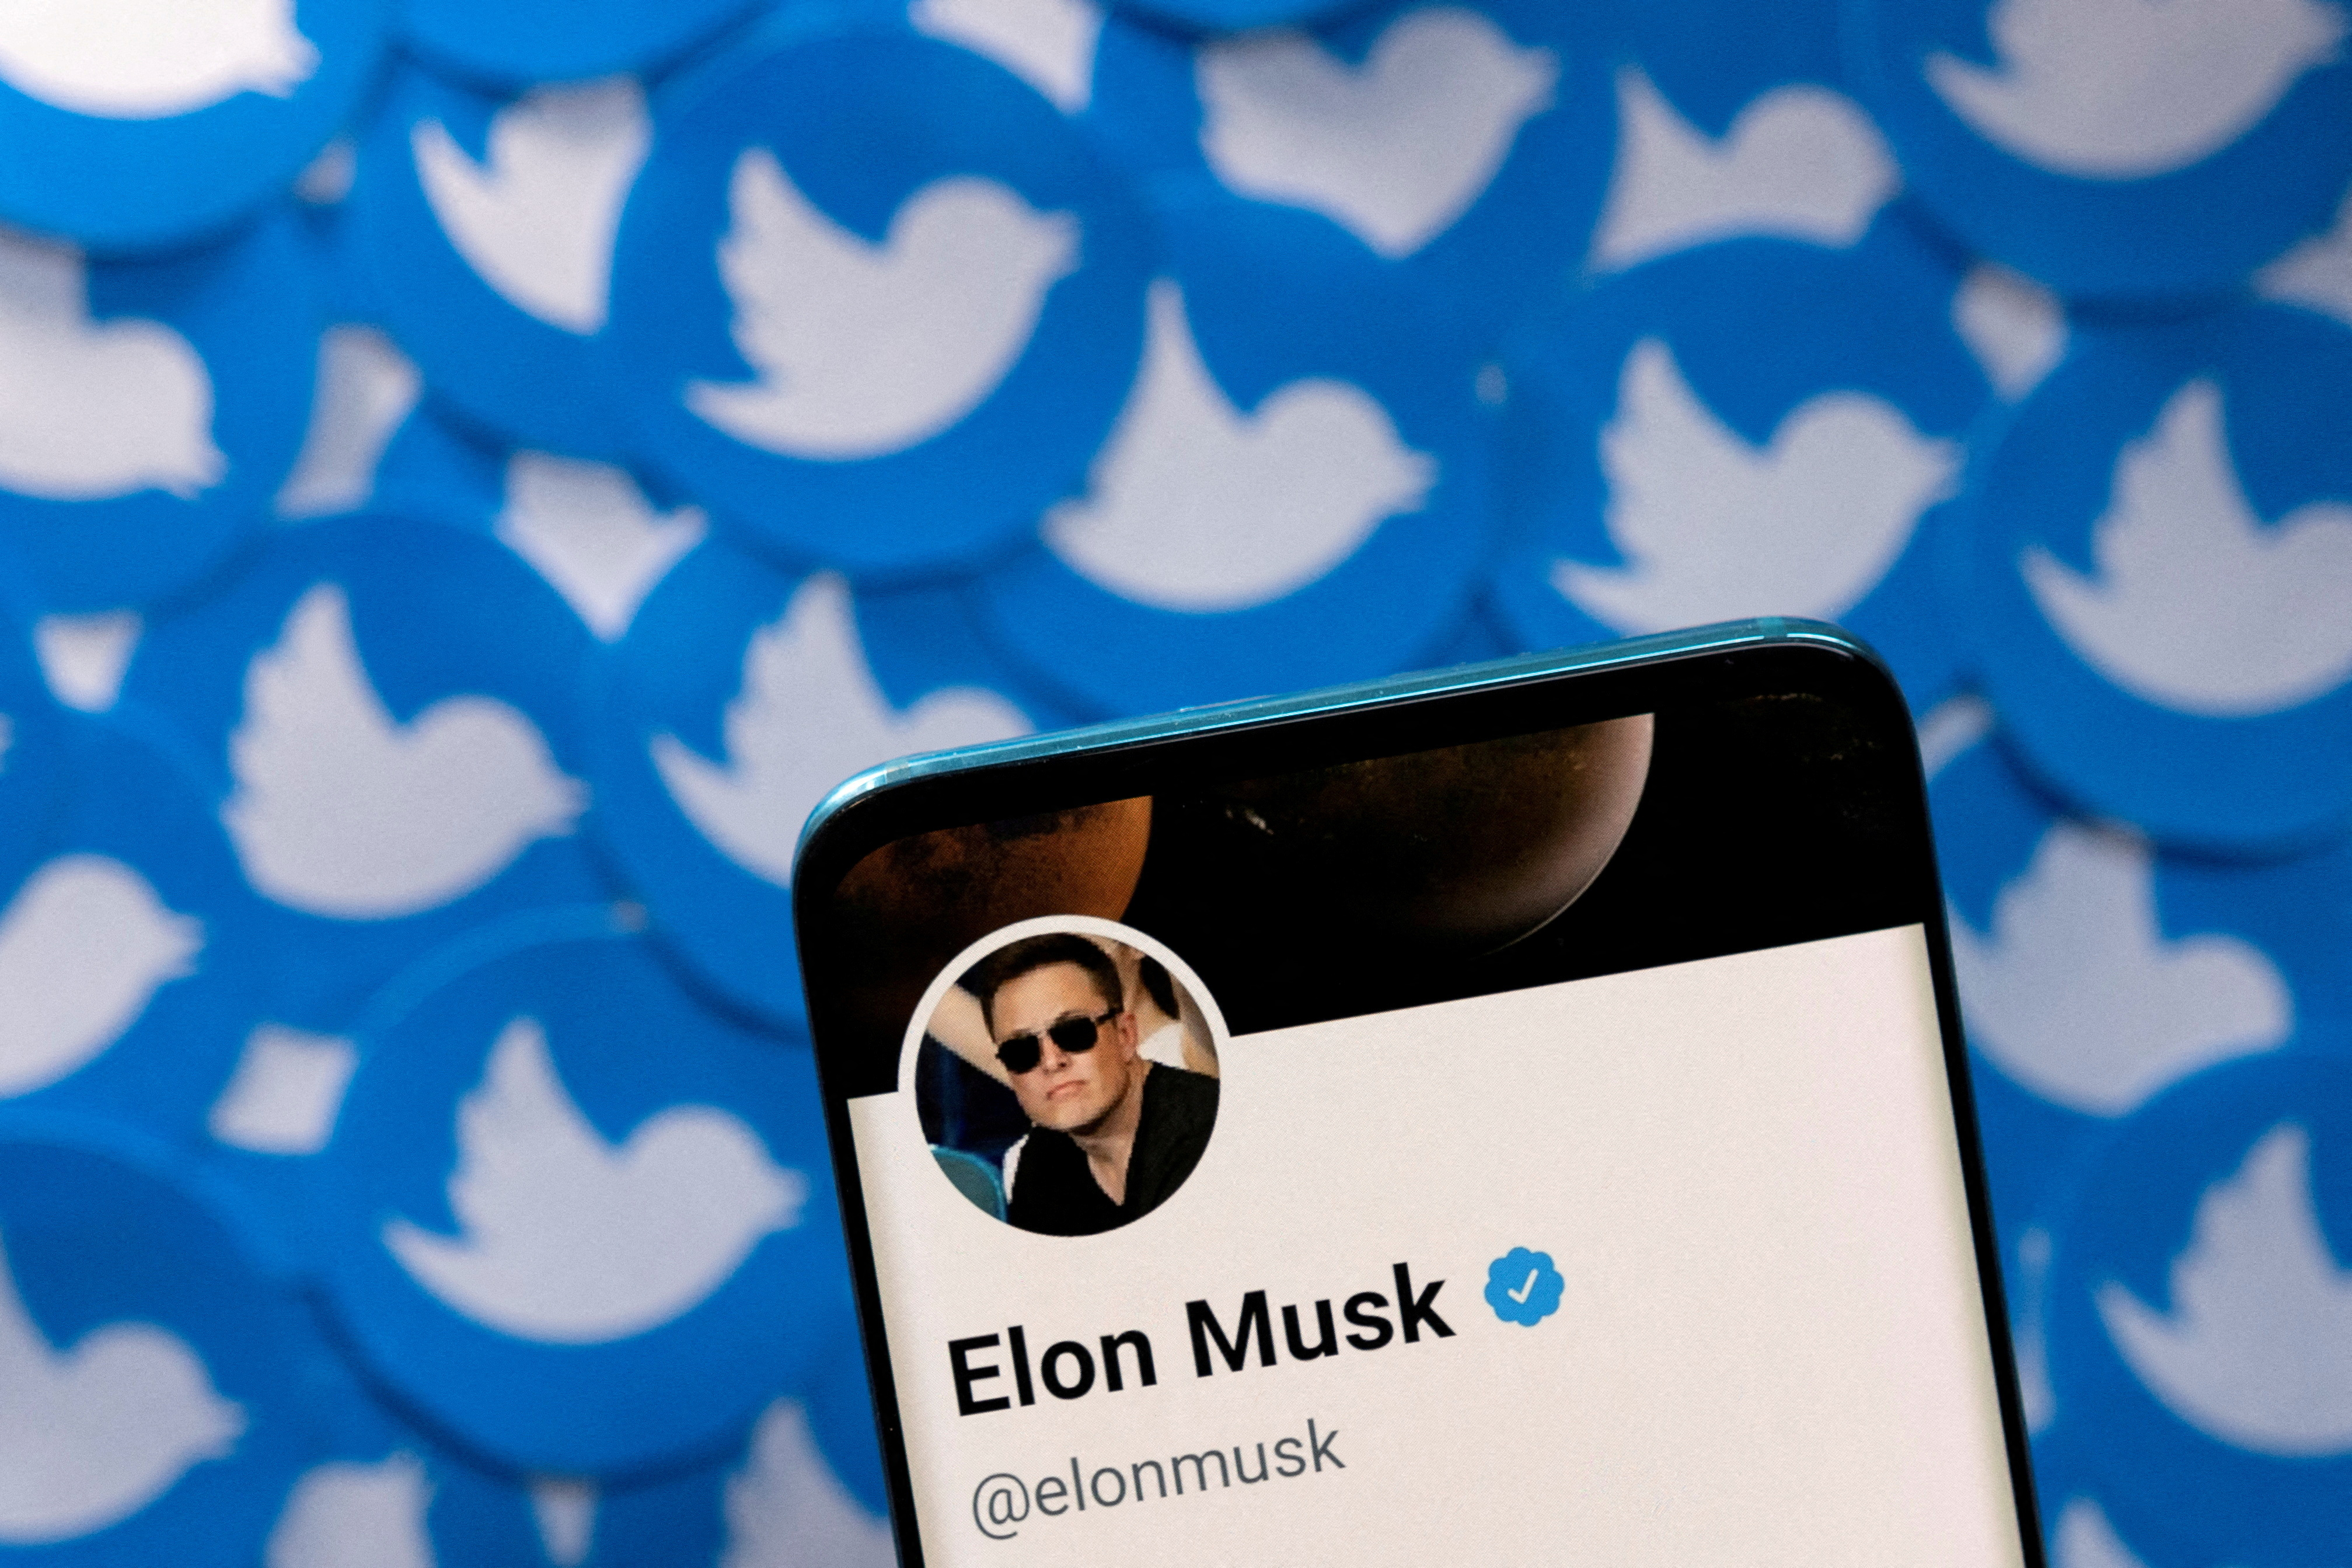 Elon Musk Twitter profile 